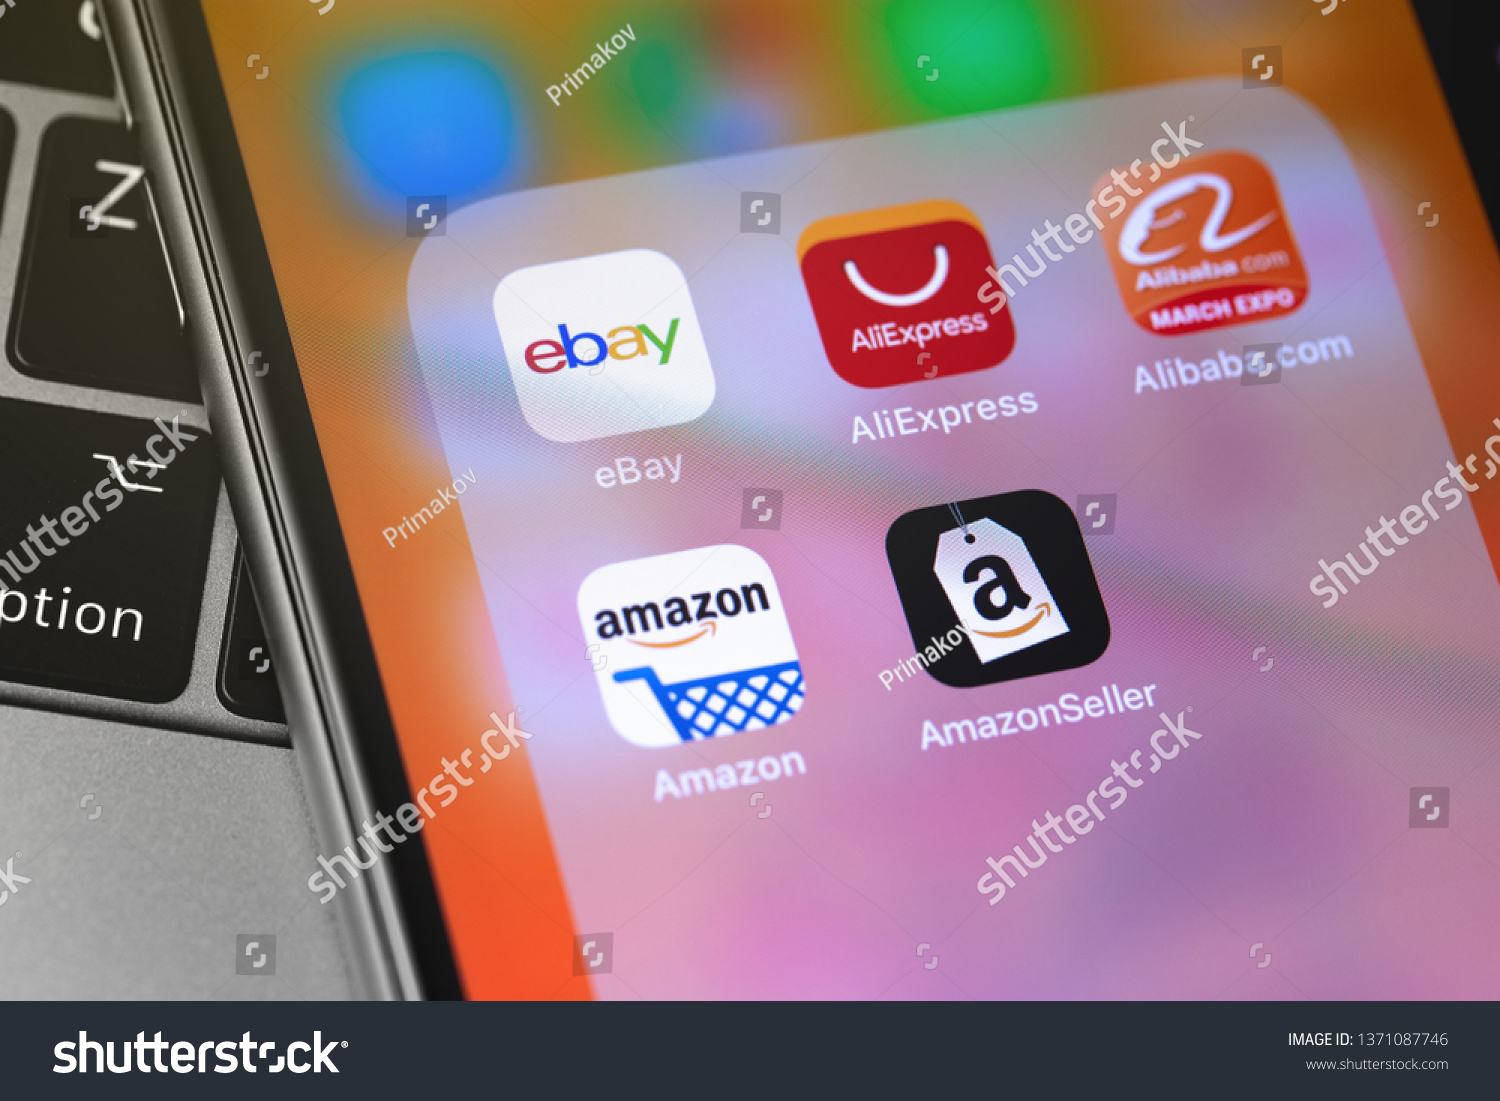 Ebay Amazon Aliexpress Alibaba Apps Icon Stock Photo Edit Now